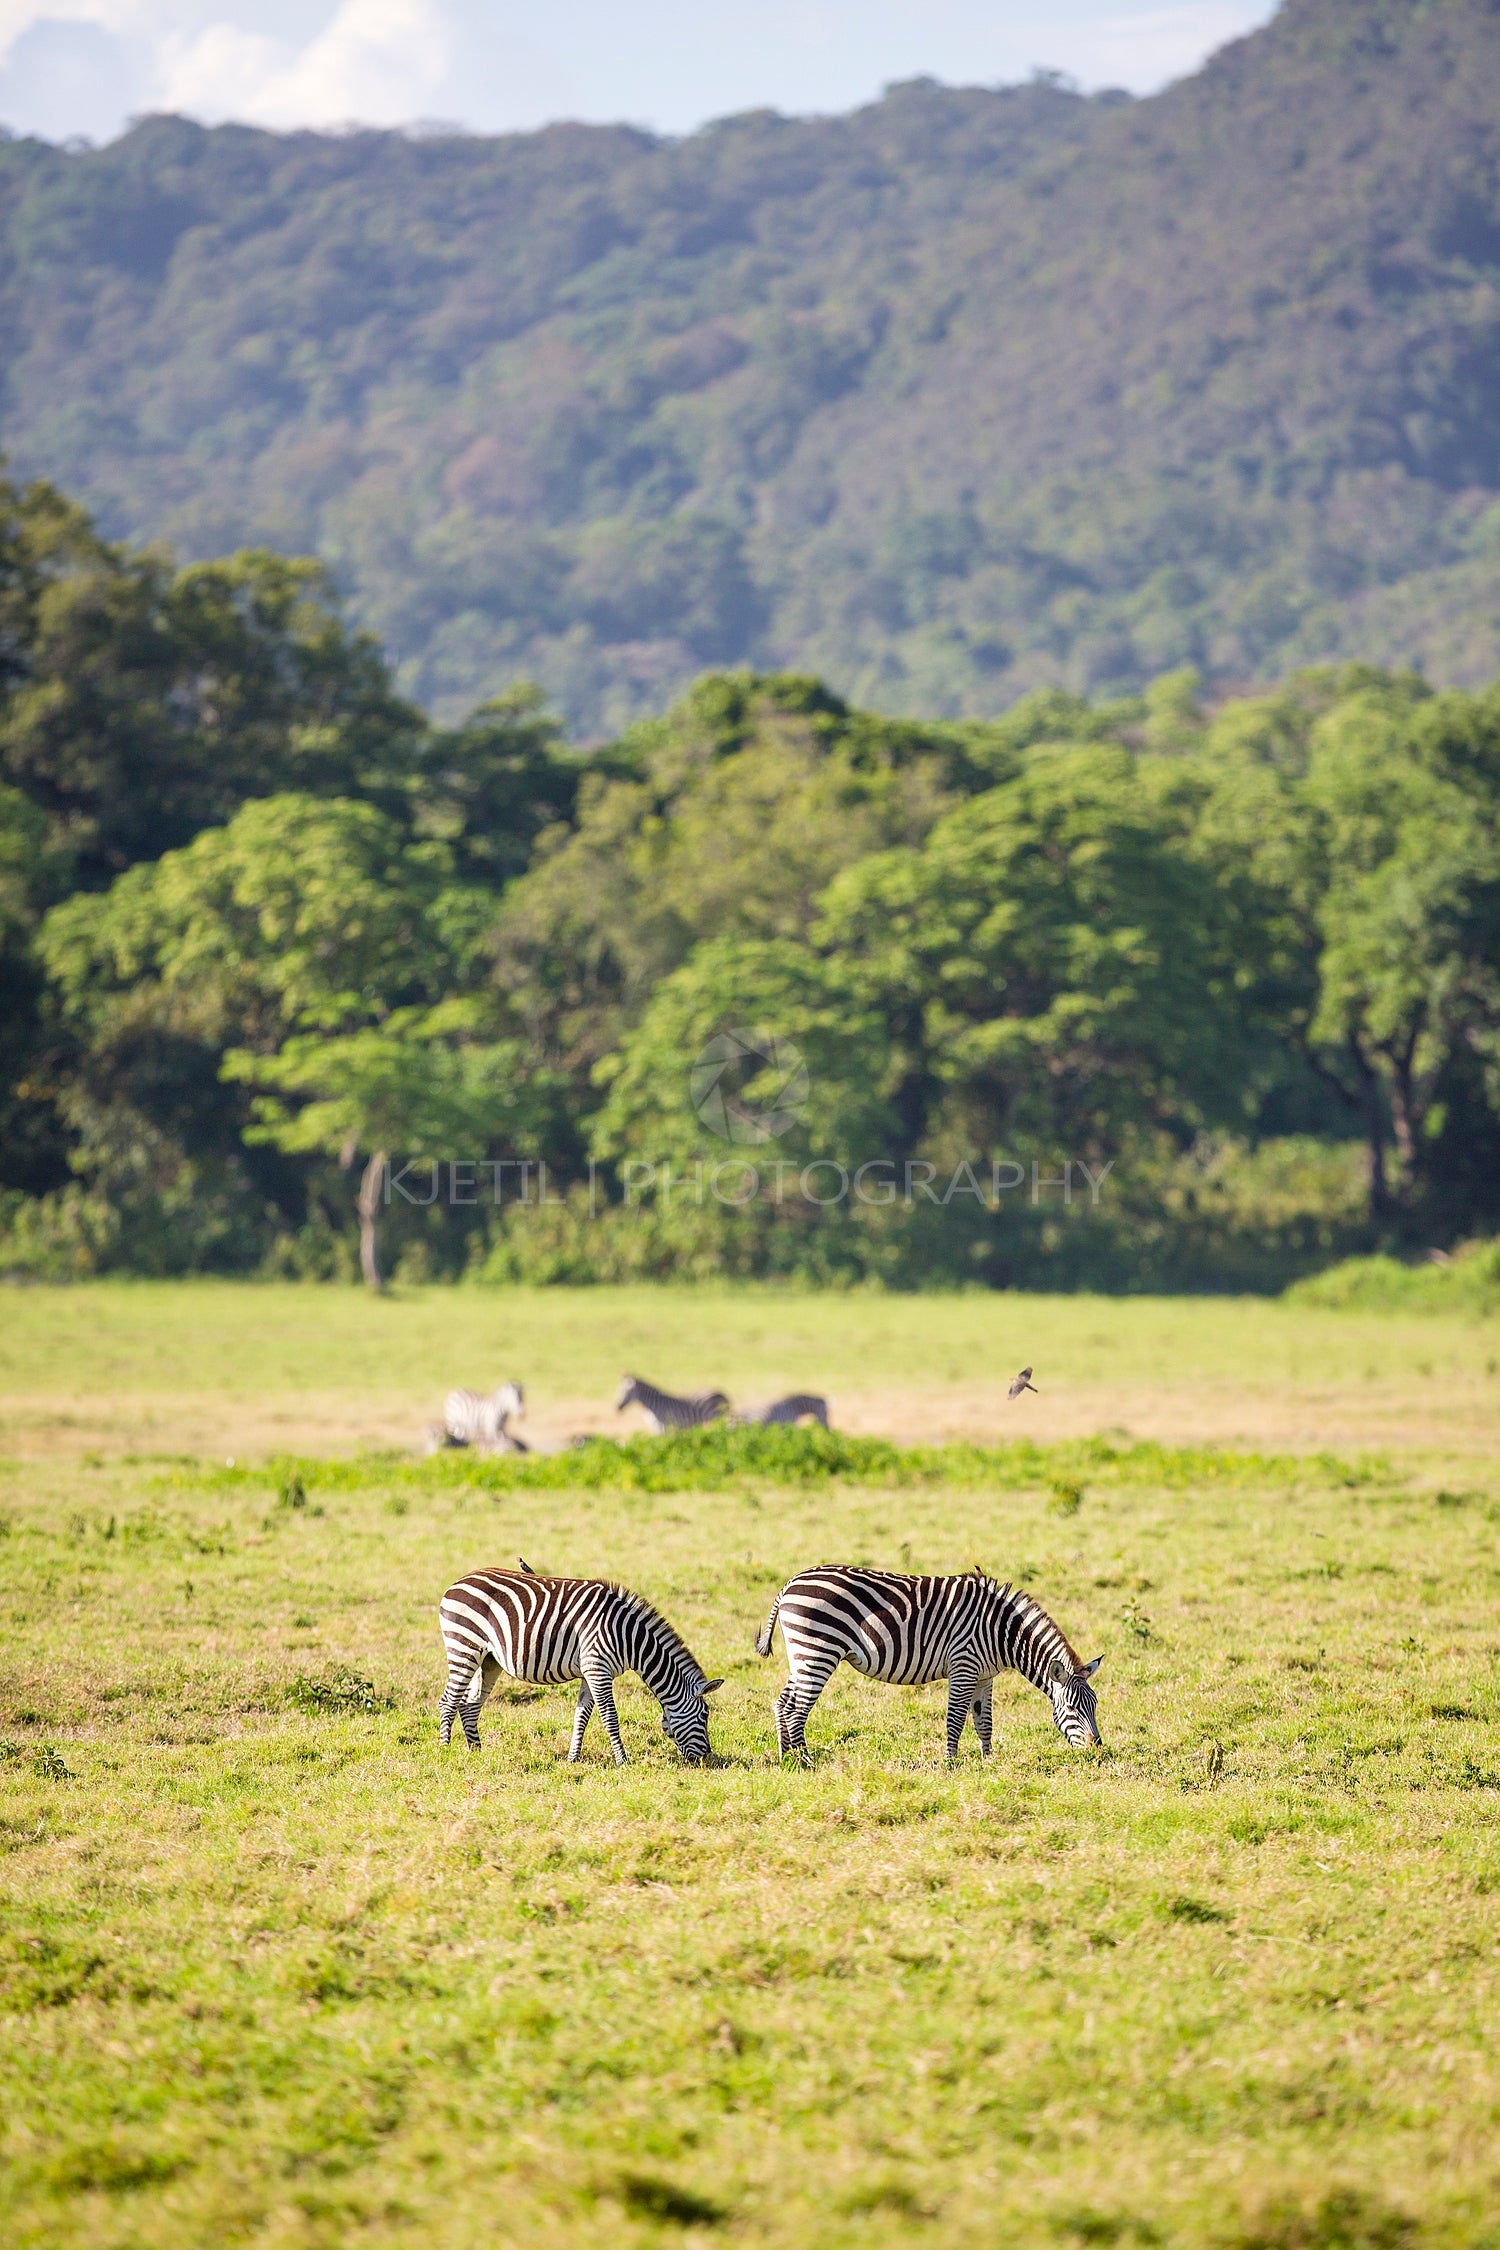 Wild zebras grazing in Africa